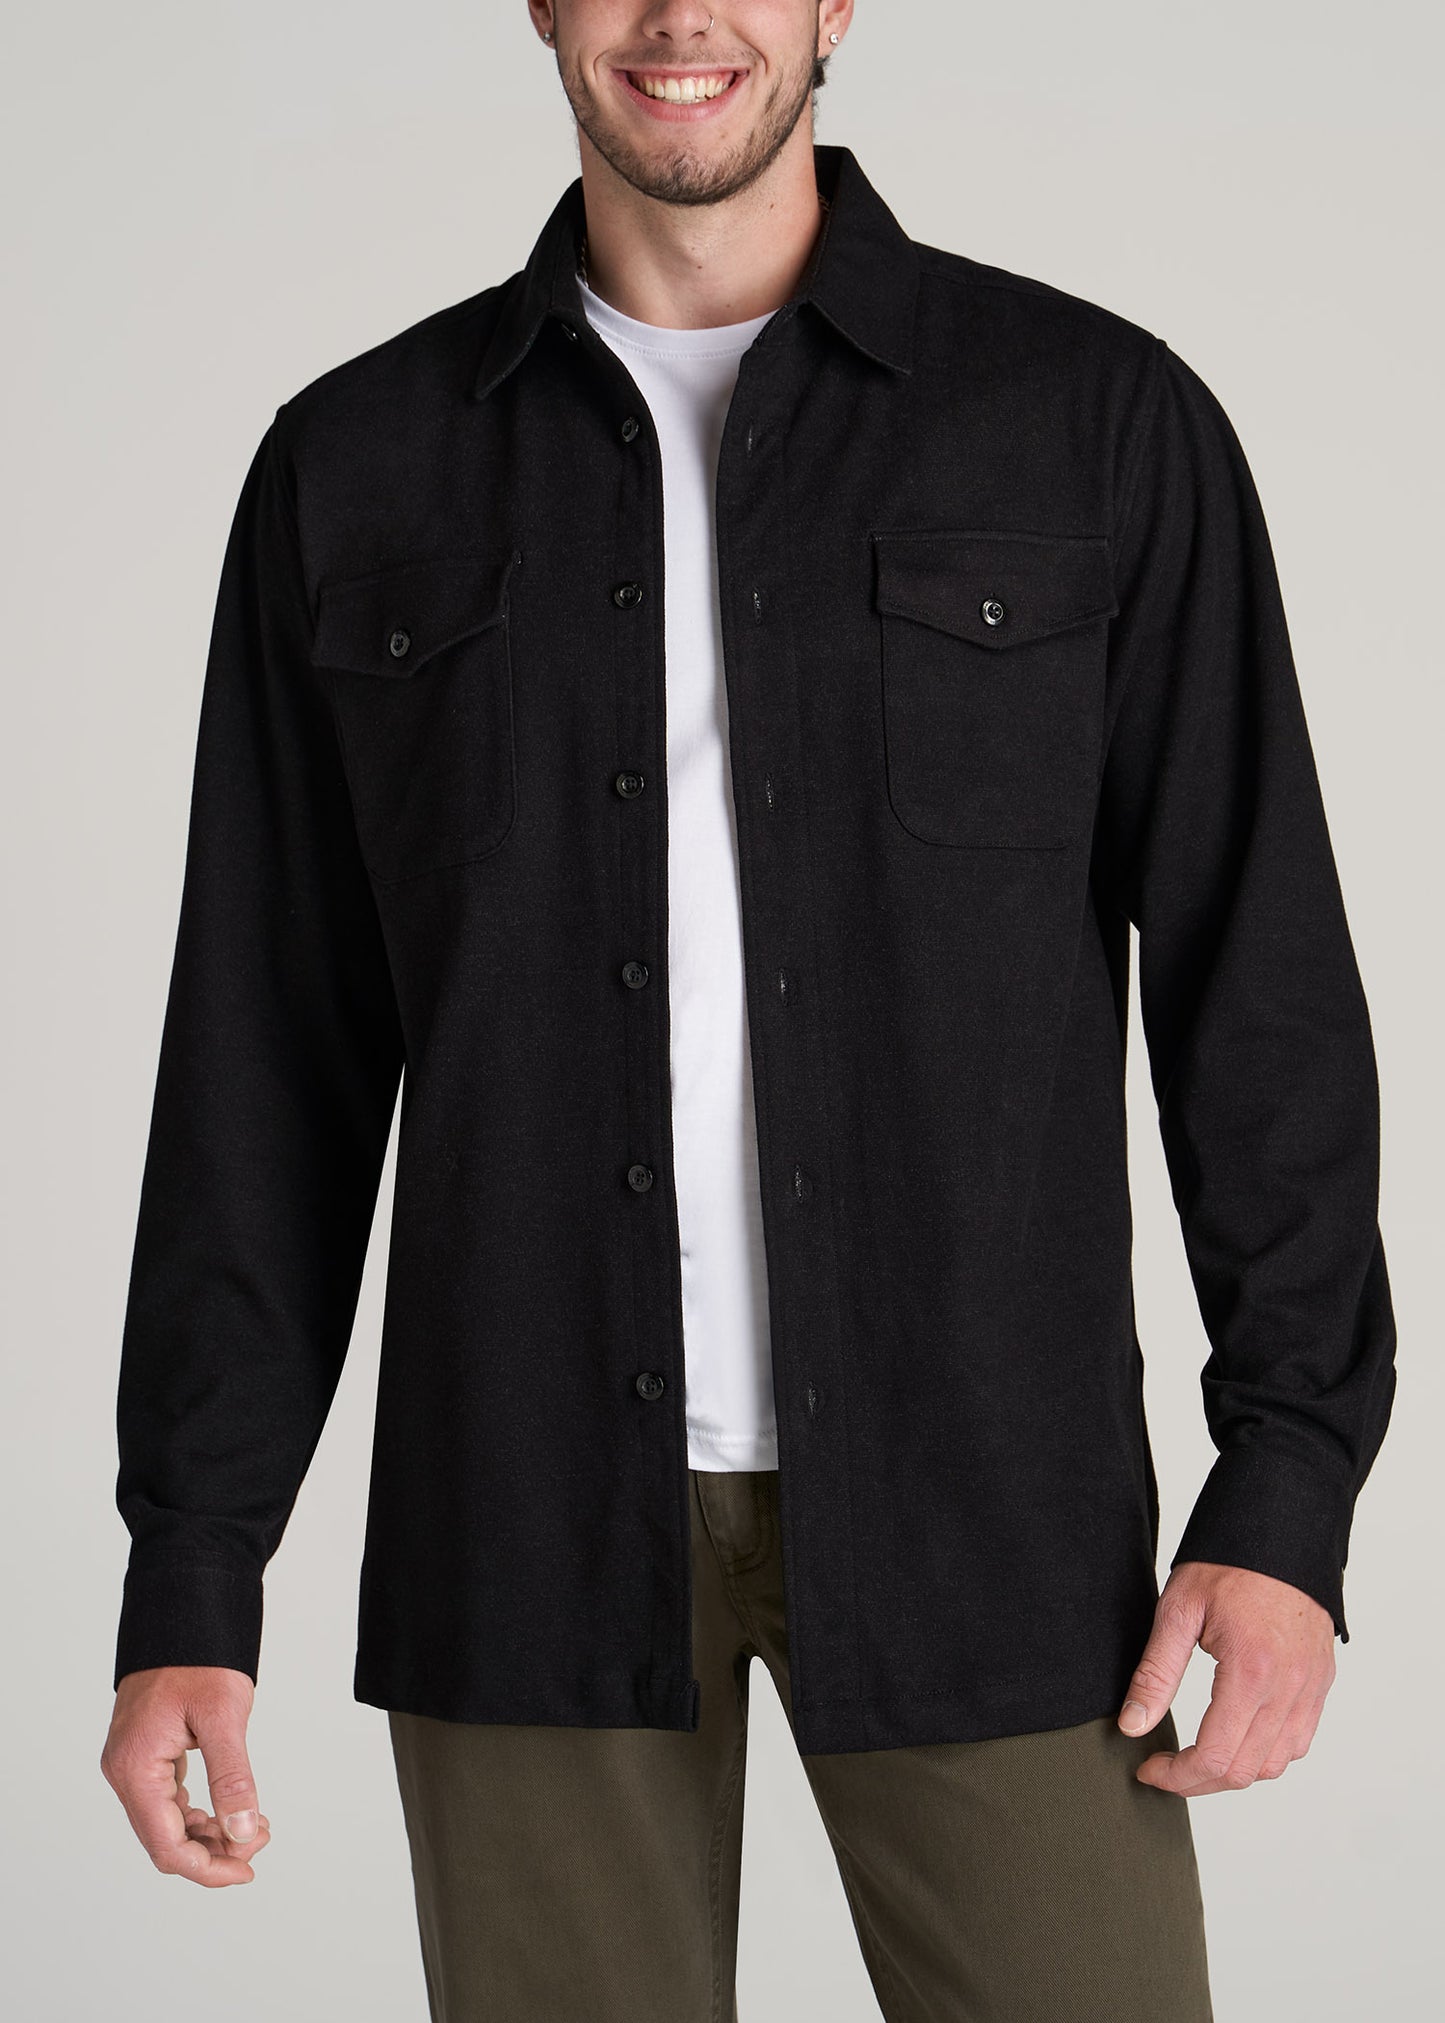       American-Tall-Men-Knit-Overshirt-Black-front